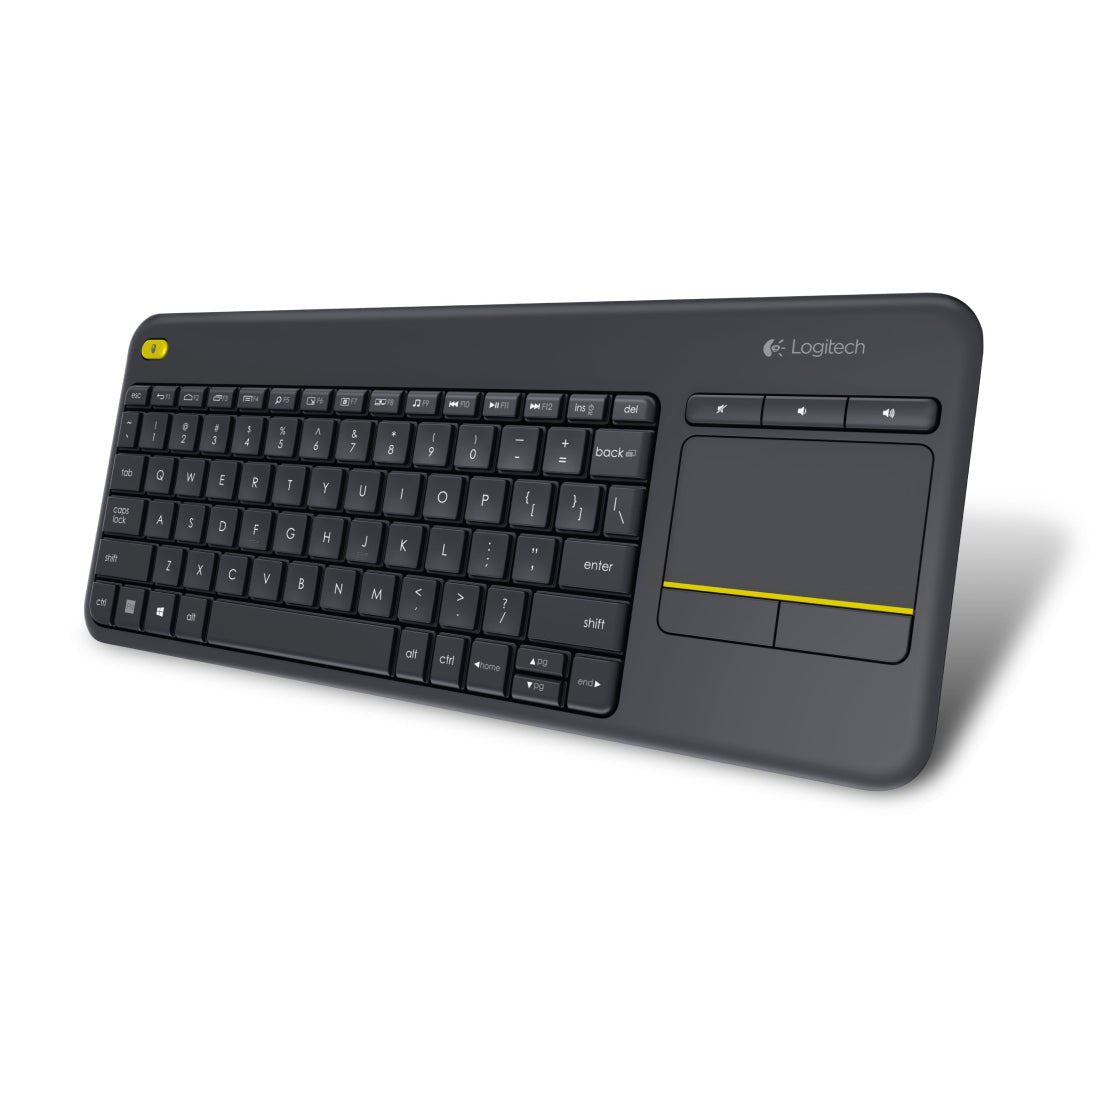 Logitech K400 Plus Wireless Keyboard With Touchpad - لوحة مفاتيح - Store 974 | ستور ٩٧٤